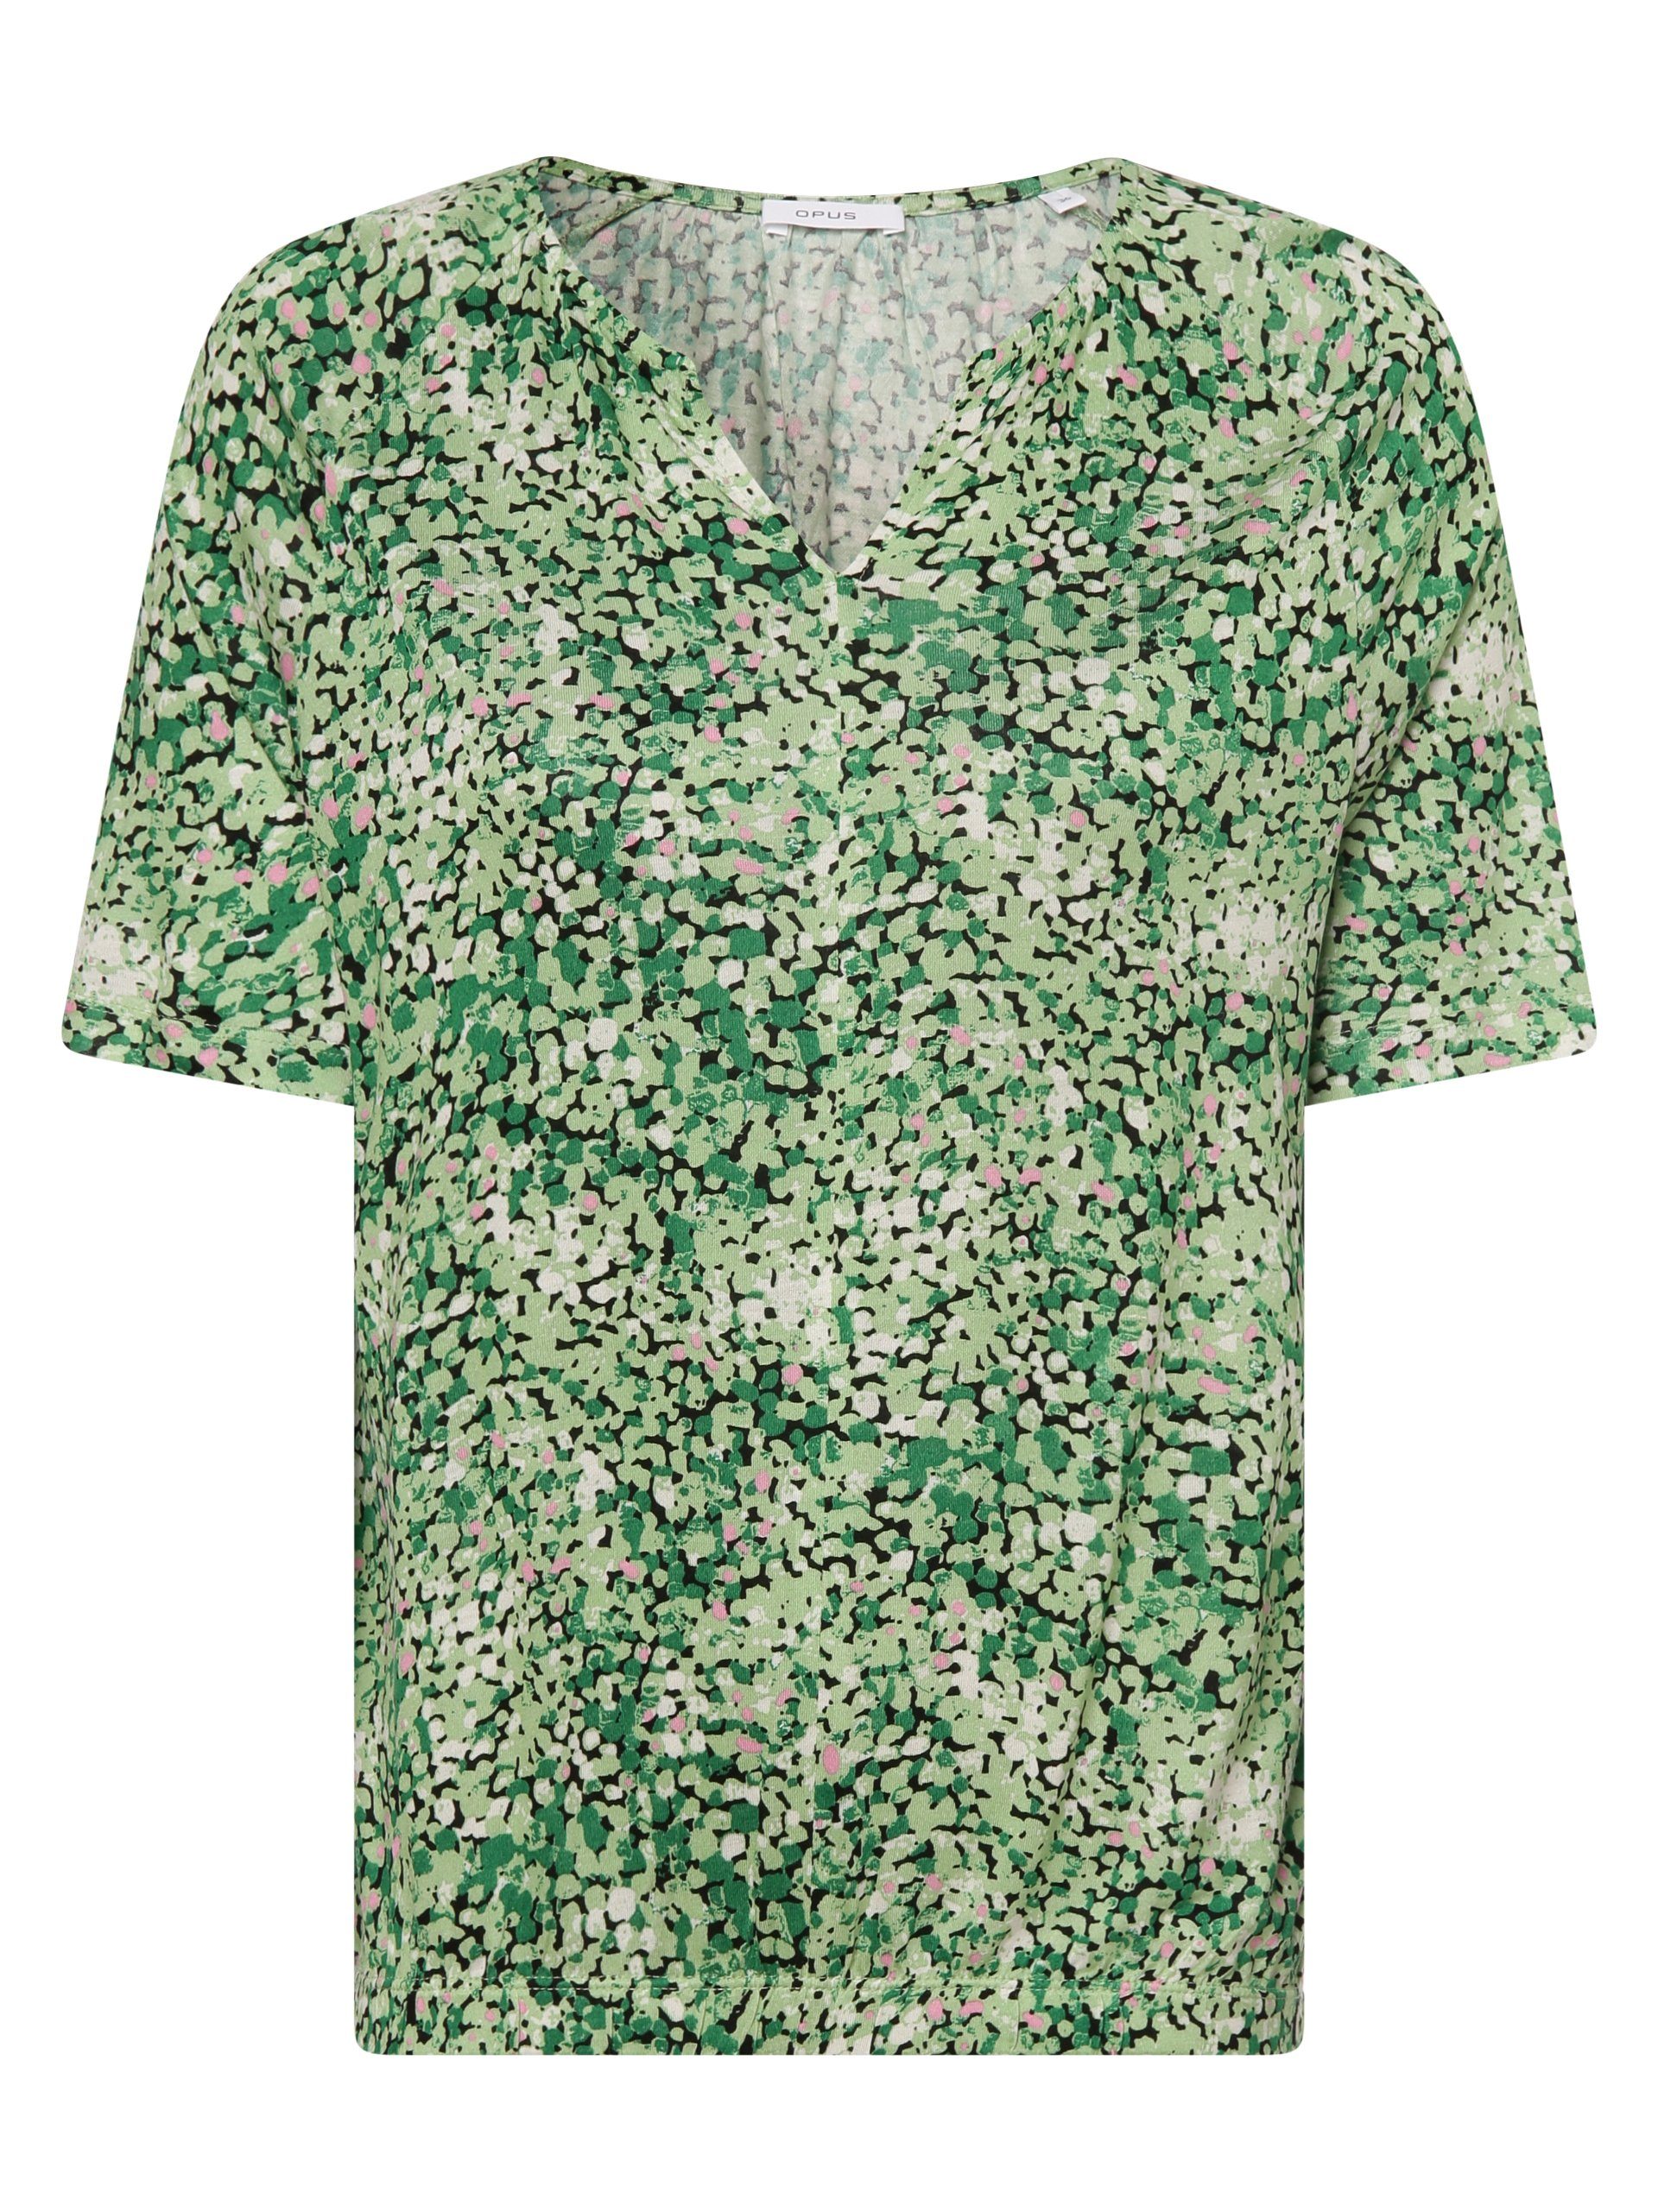 OPUS T-Shirt Simani 30002 green fla